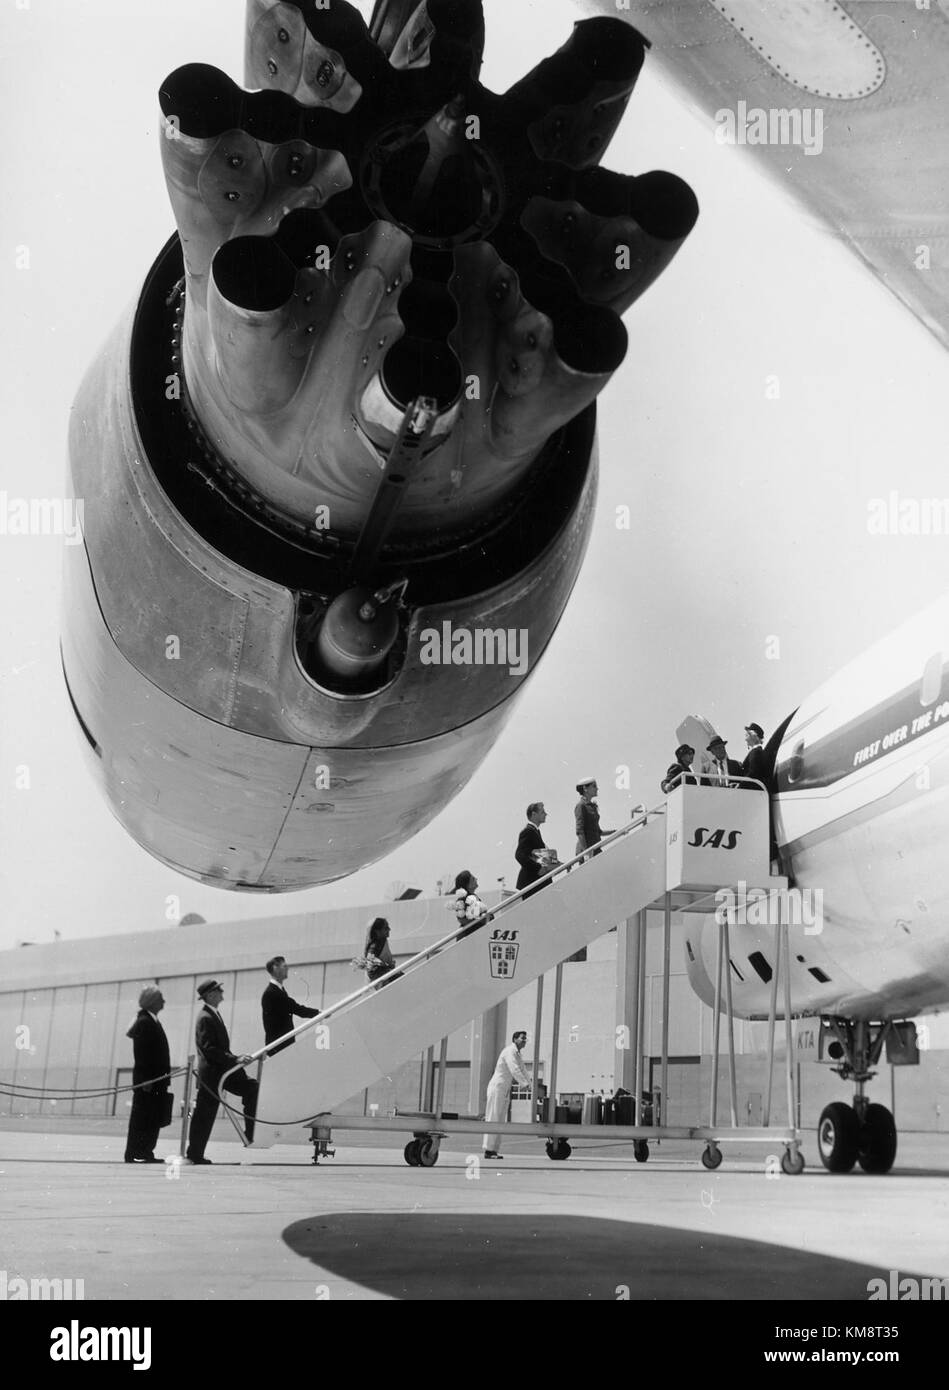 SAS DC 8 33, motore turbofan. Passeggeri a bordo dell'aereo, scala Foto  stock - Alamy